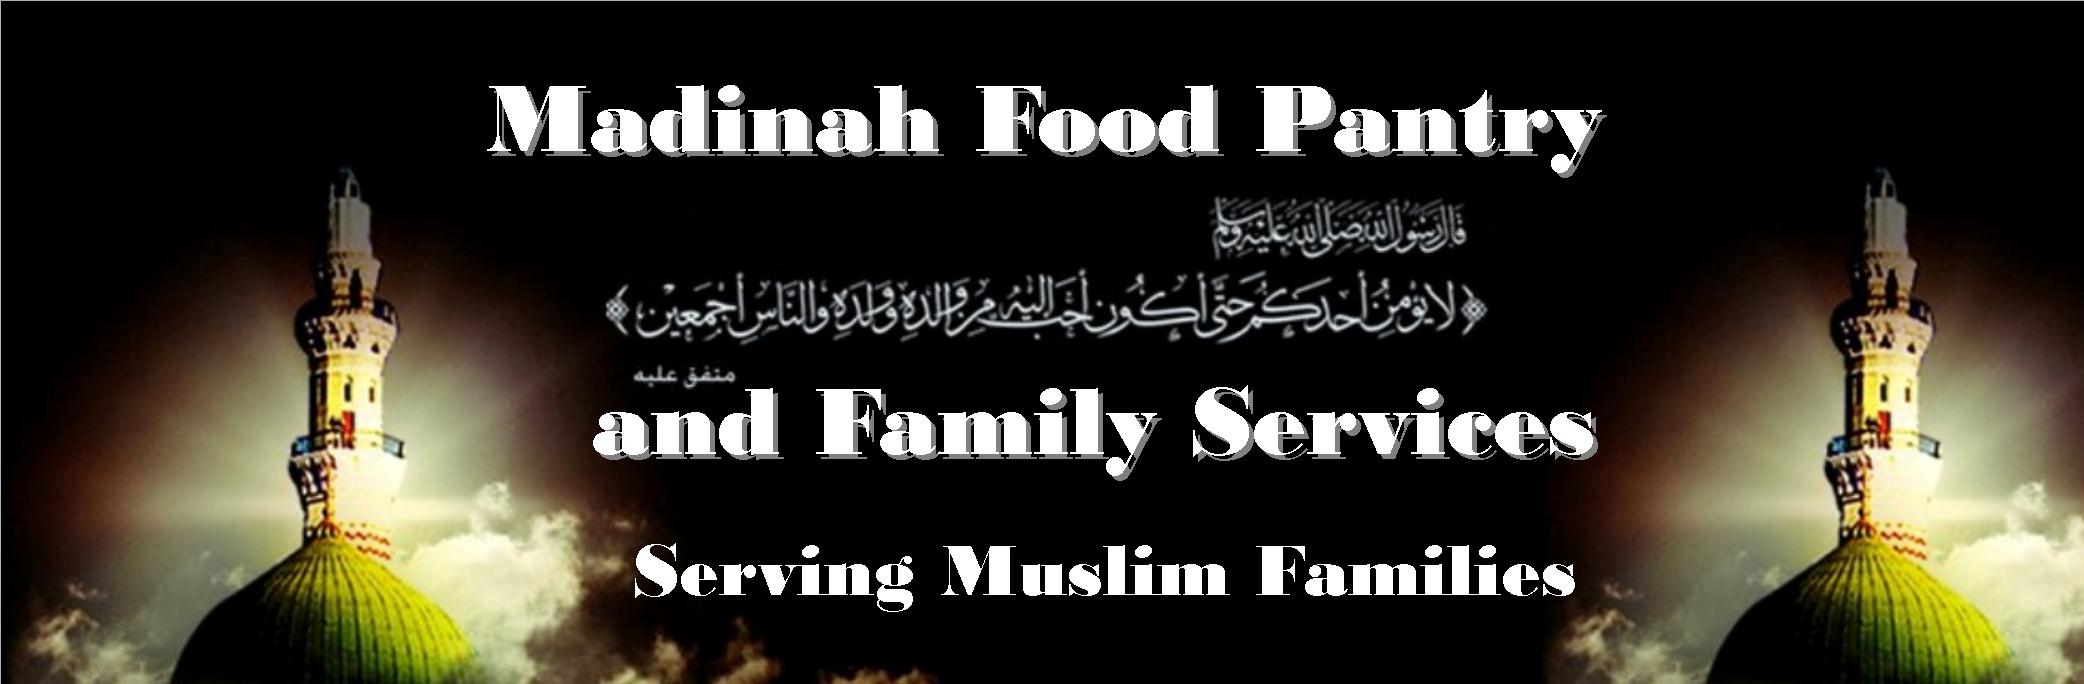 Madinah Food Pantry Inc.